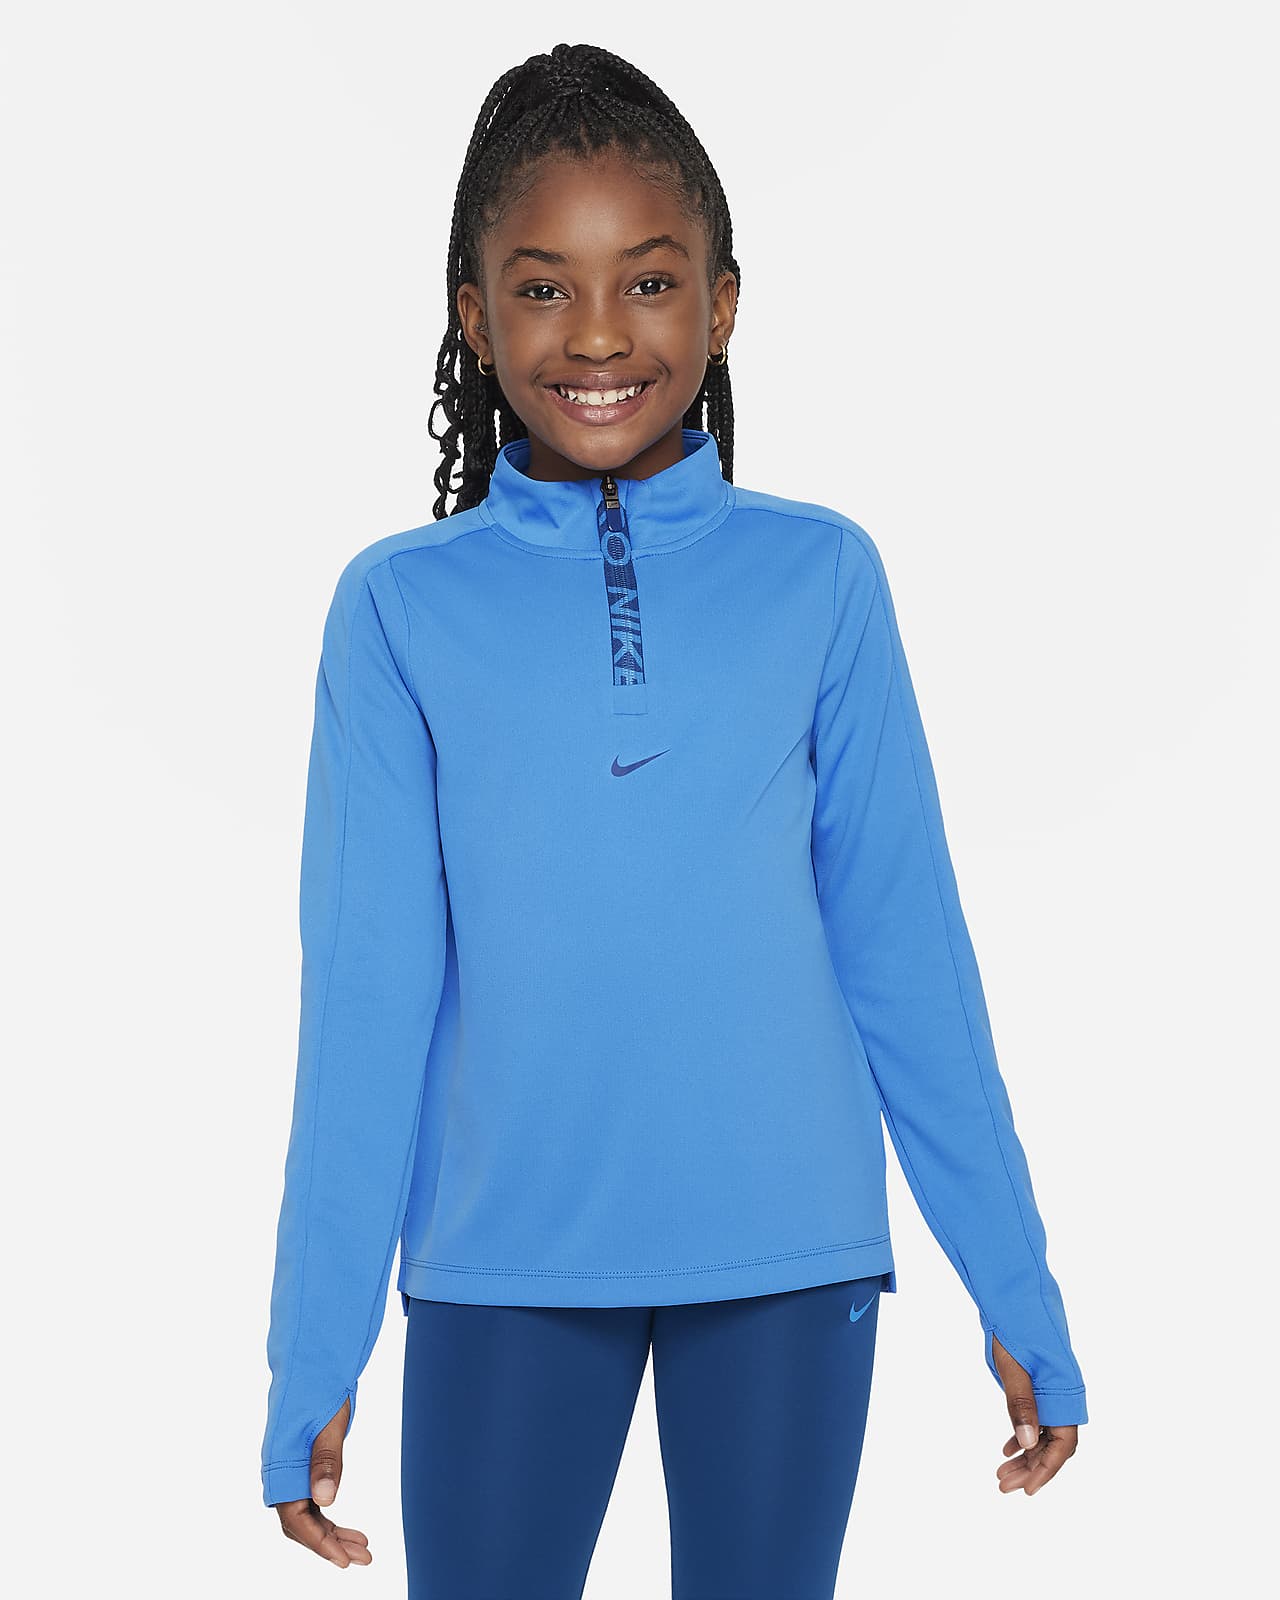 Nike Girl's Pro Cool 3/4 Training Capri/Tight, Size XL